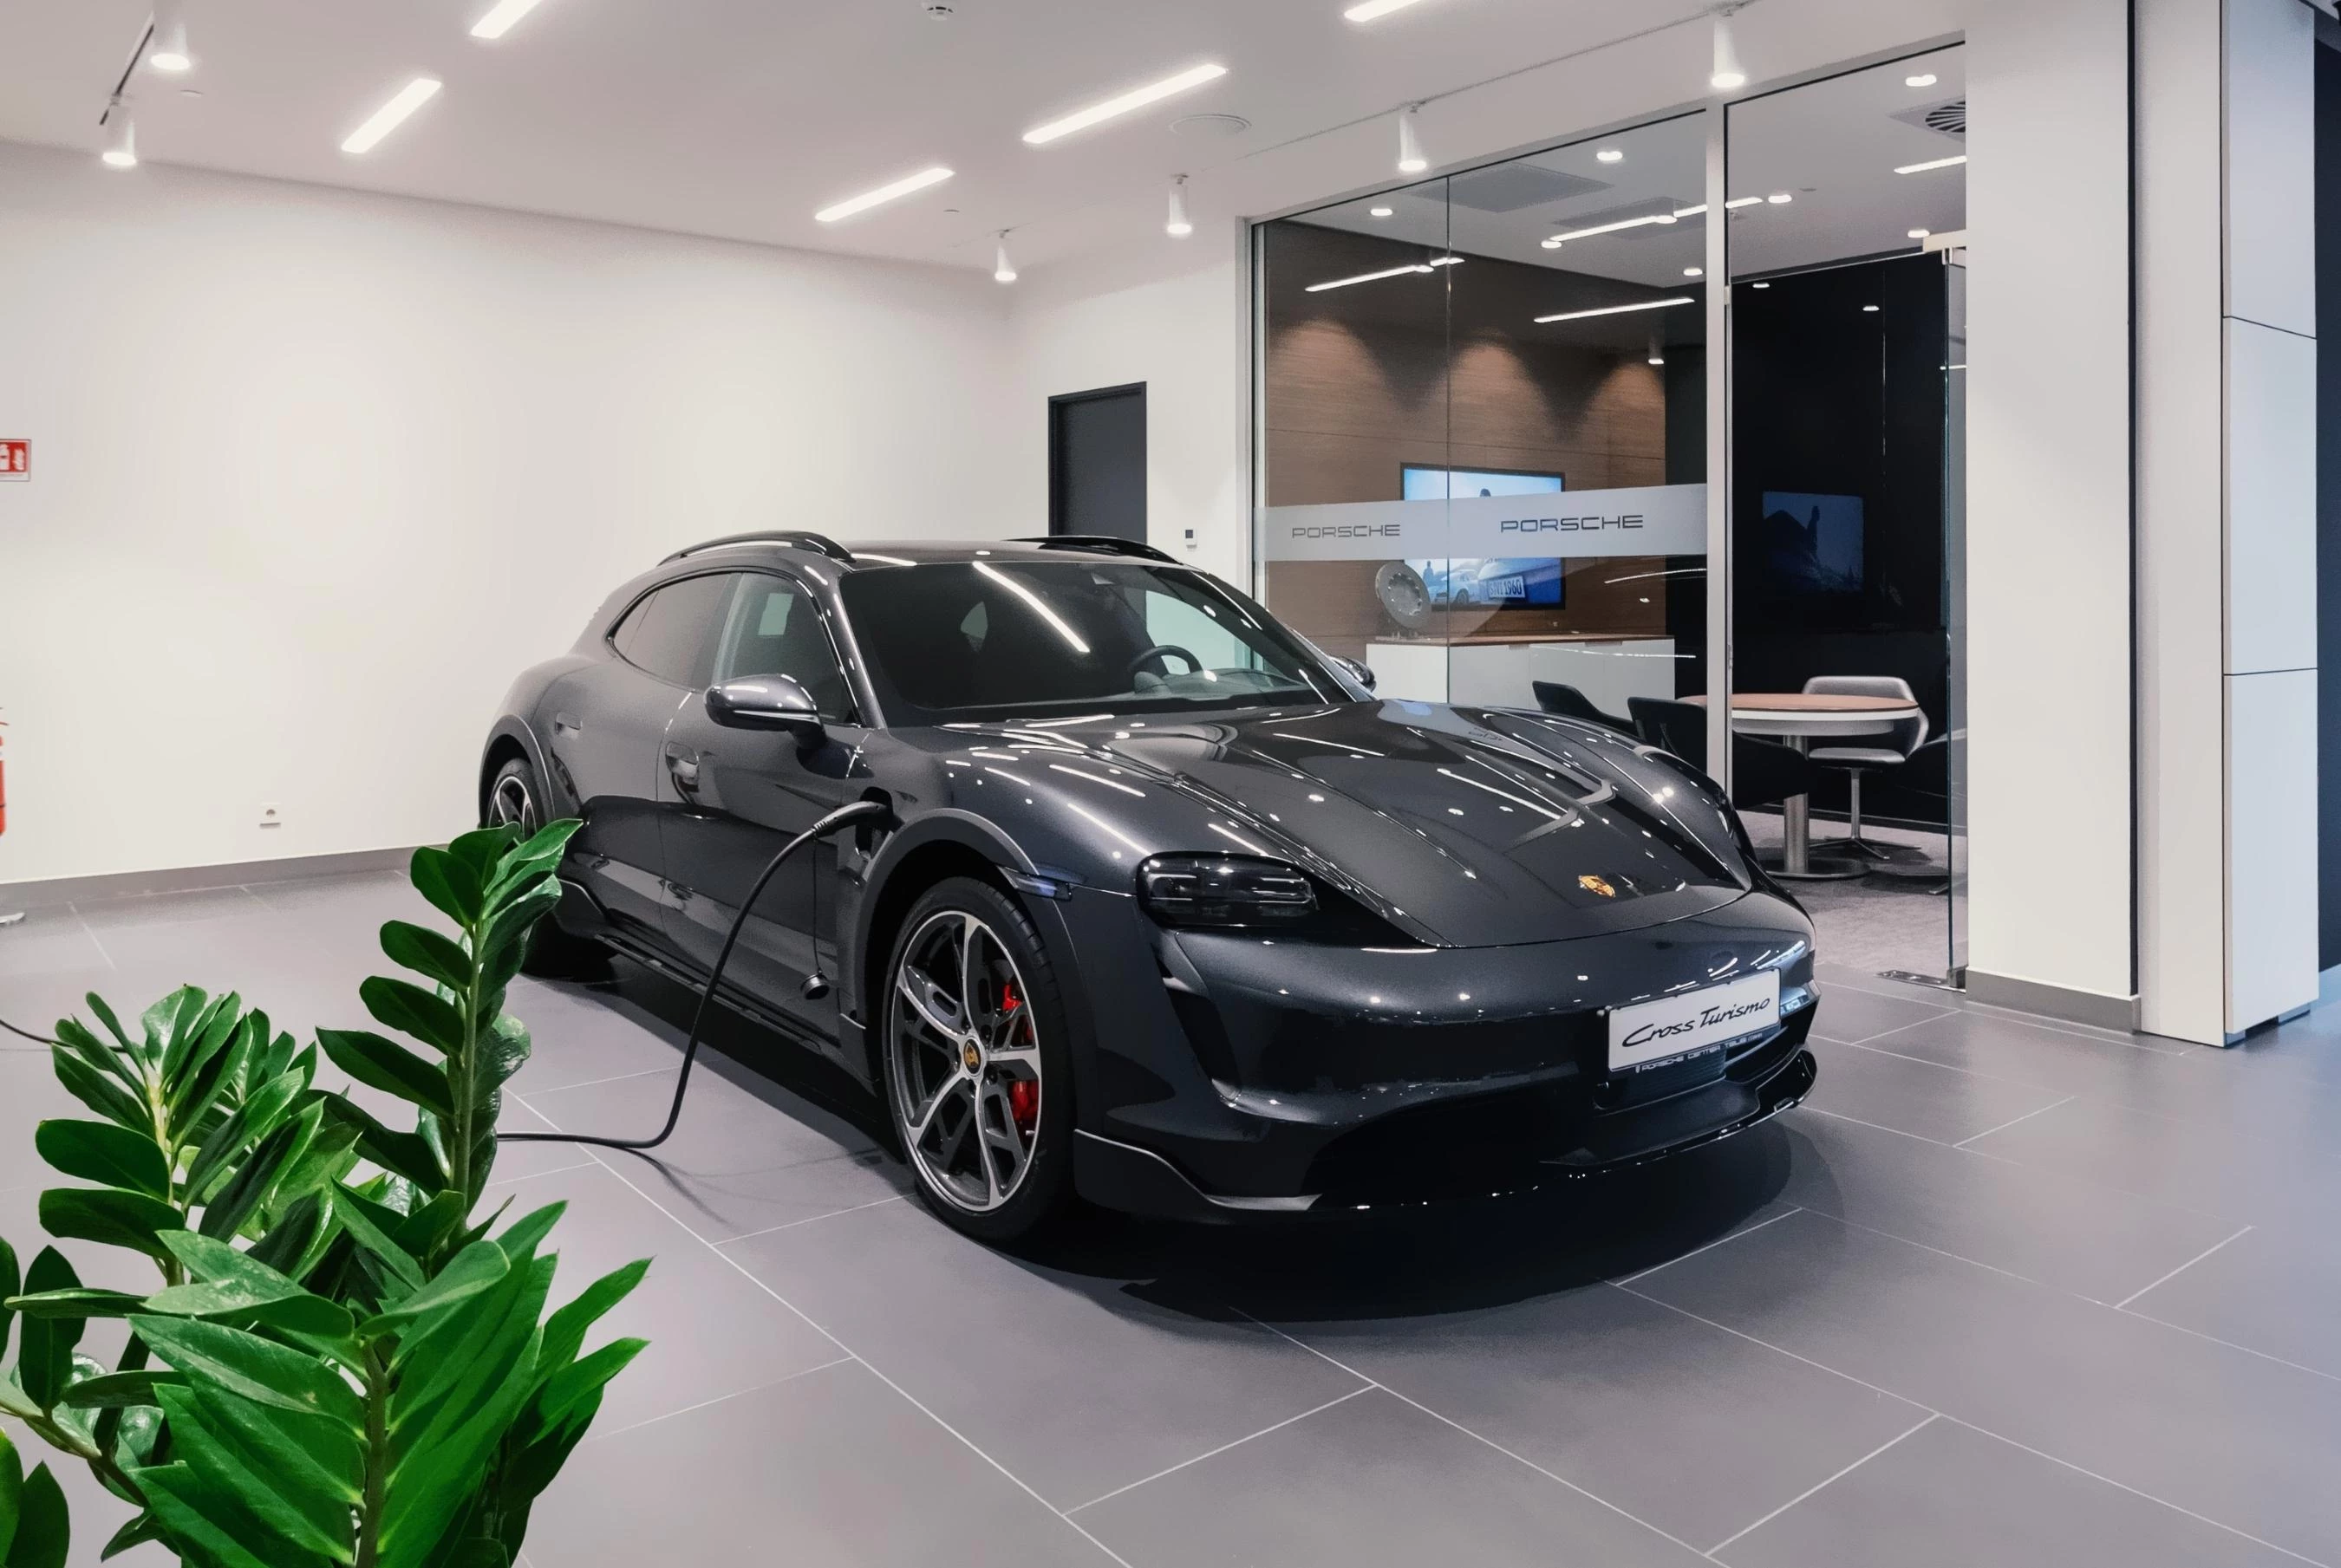 Porsche center - reconstruction